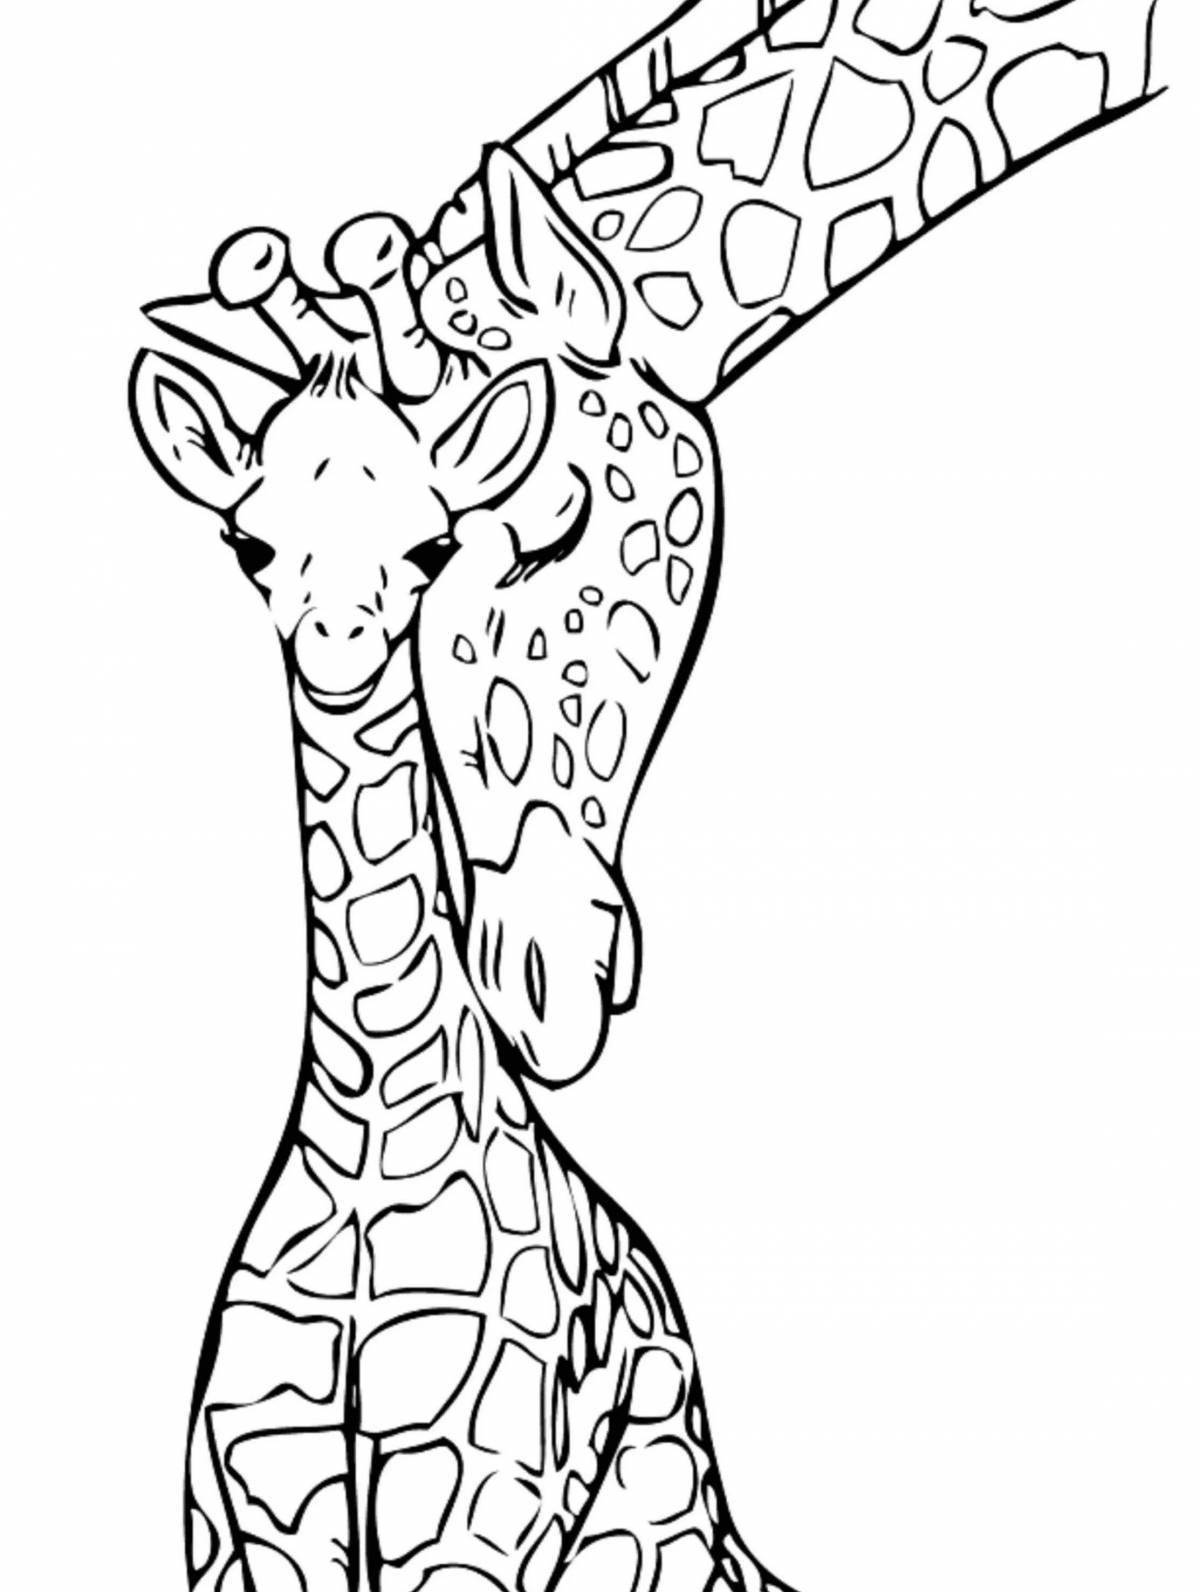 Adorable giraffe drawing for kids